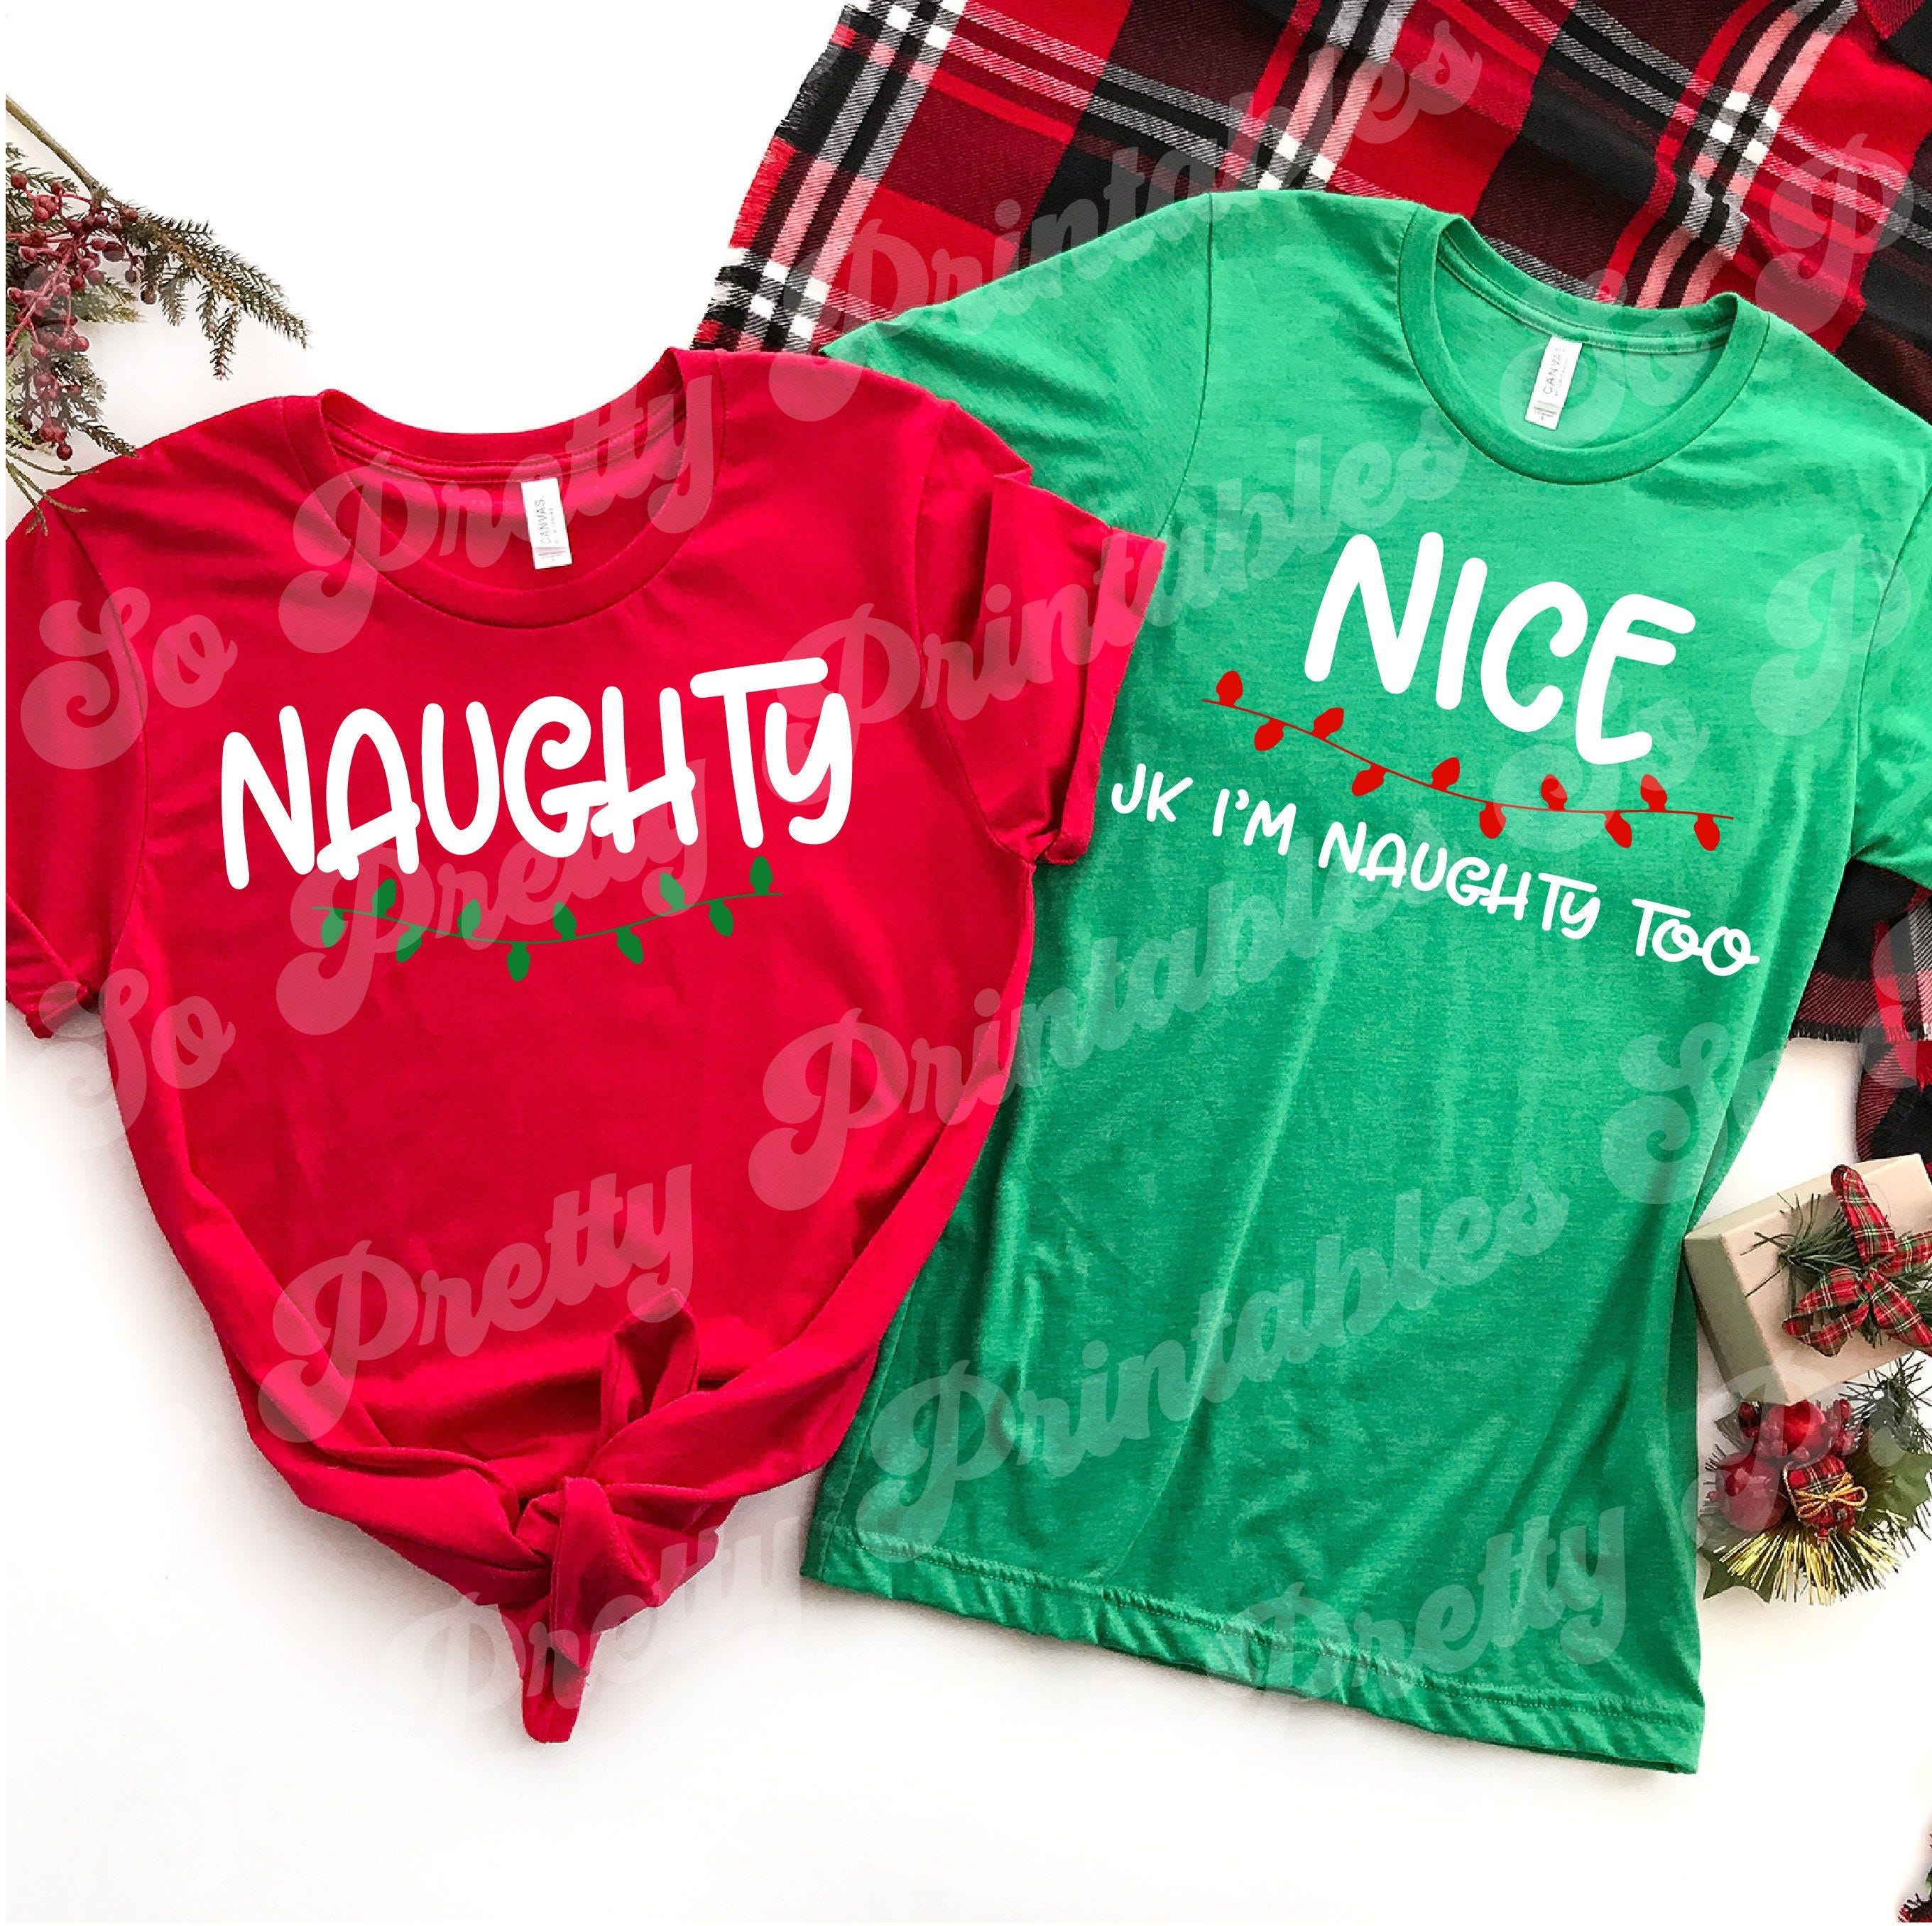 Naughty Nice Svg, Christmas Svg, Friend Christmas Shirt SVG,  Funny Christmas Svg, Holiday SVG, Winter Svg, Shirt SVG, dxf, png, eps